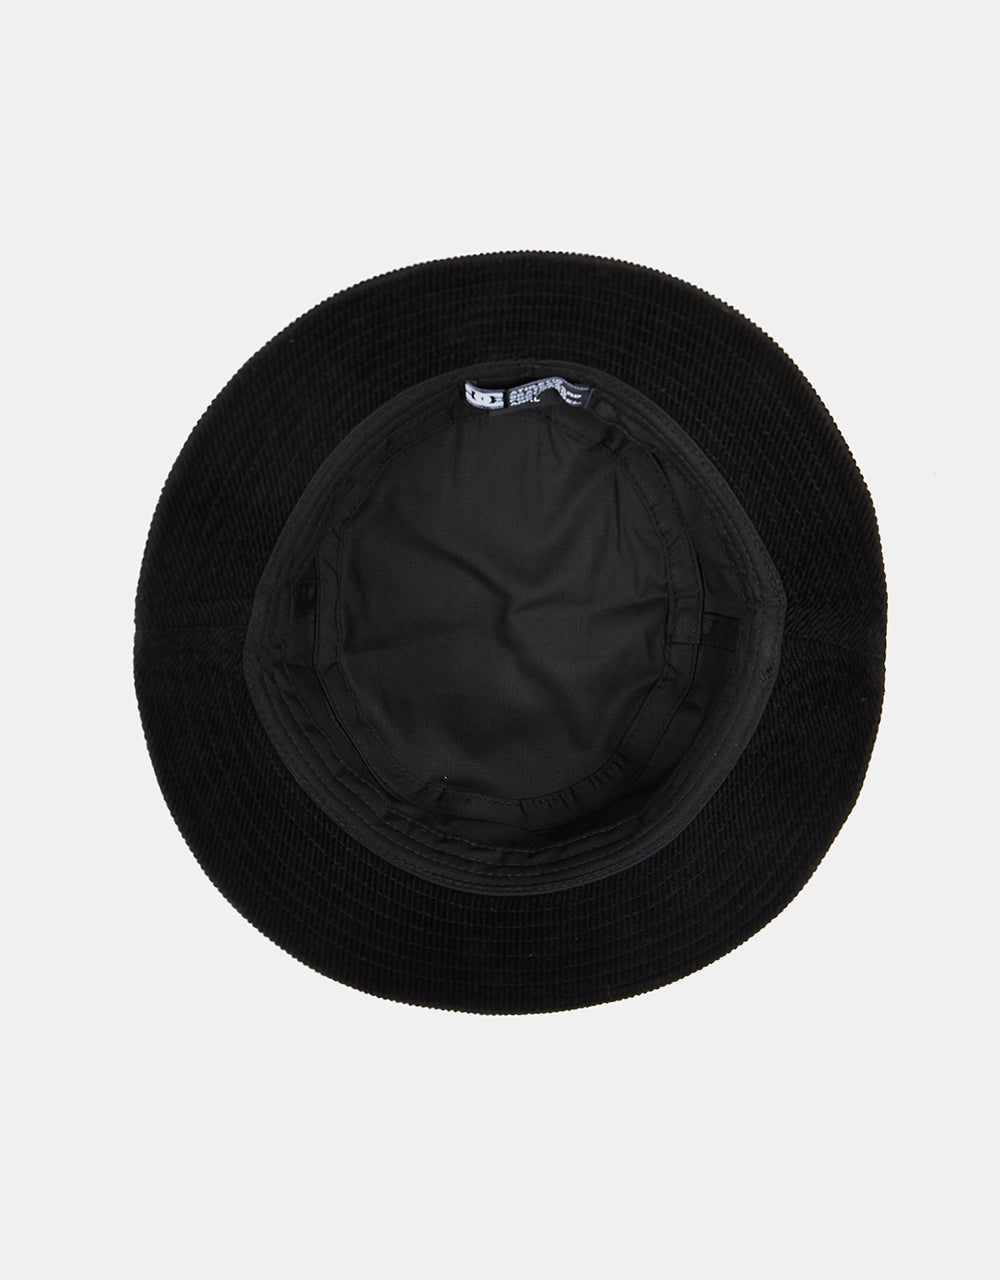 DC Expedition Bucket Hat - Black